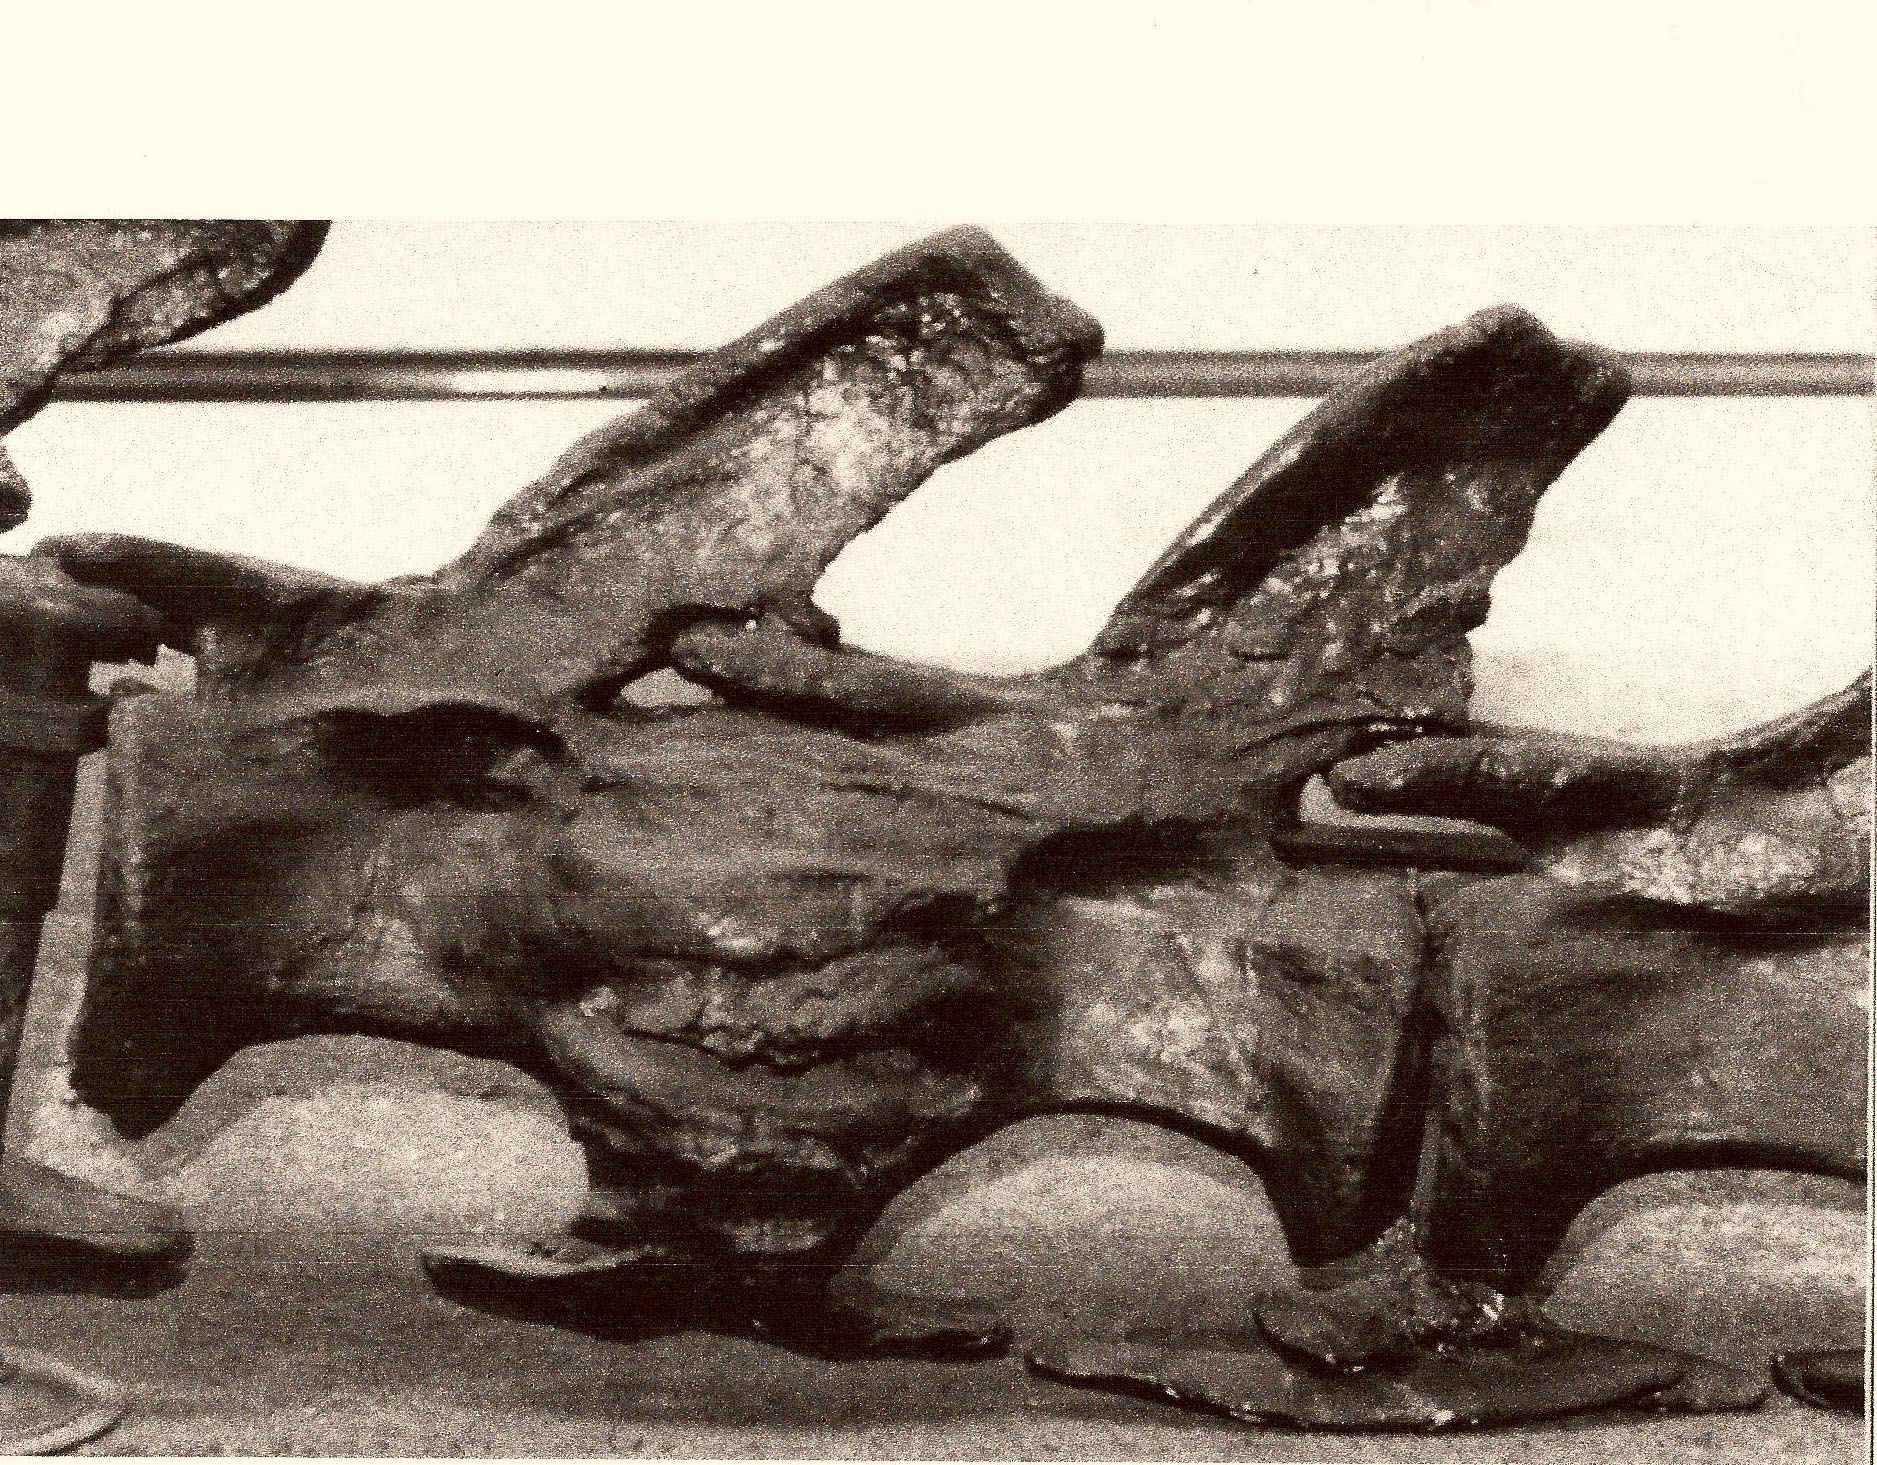 sauropod fused spine.jpg